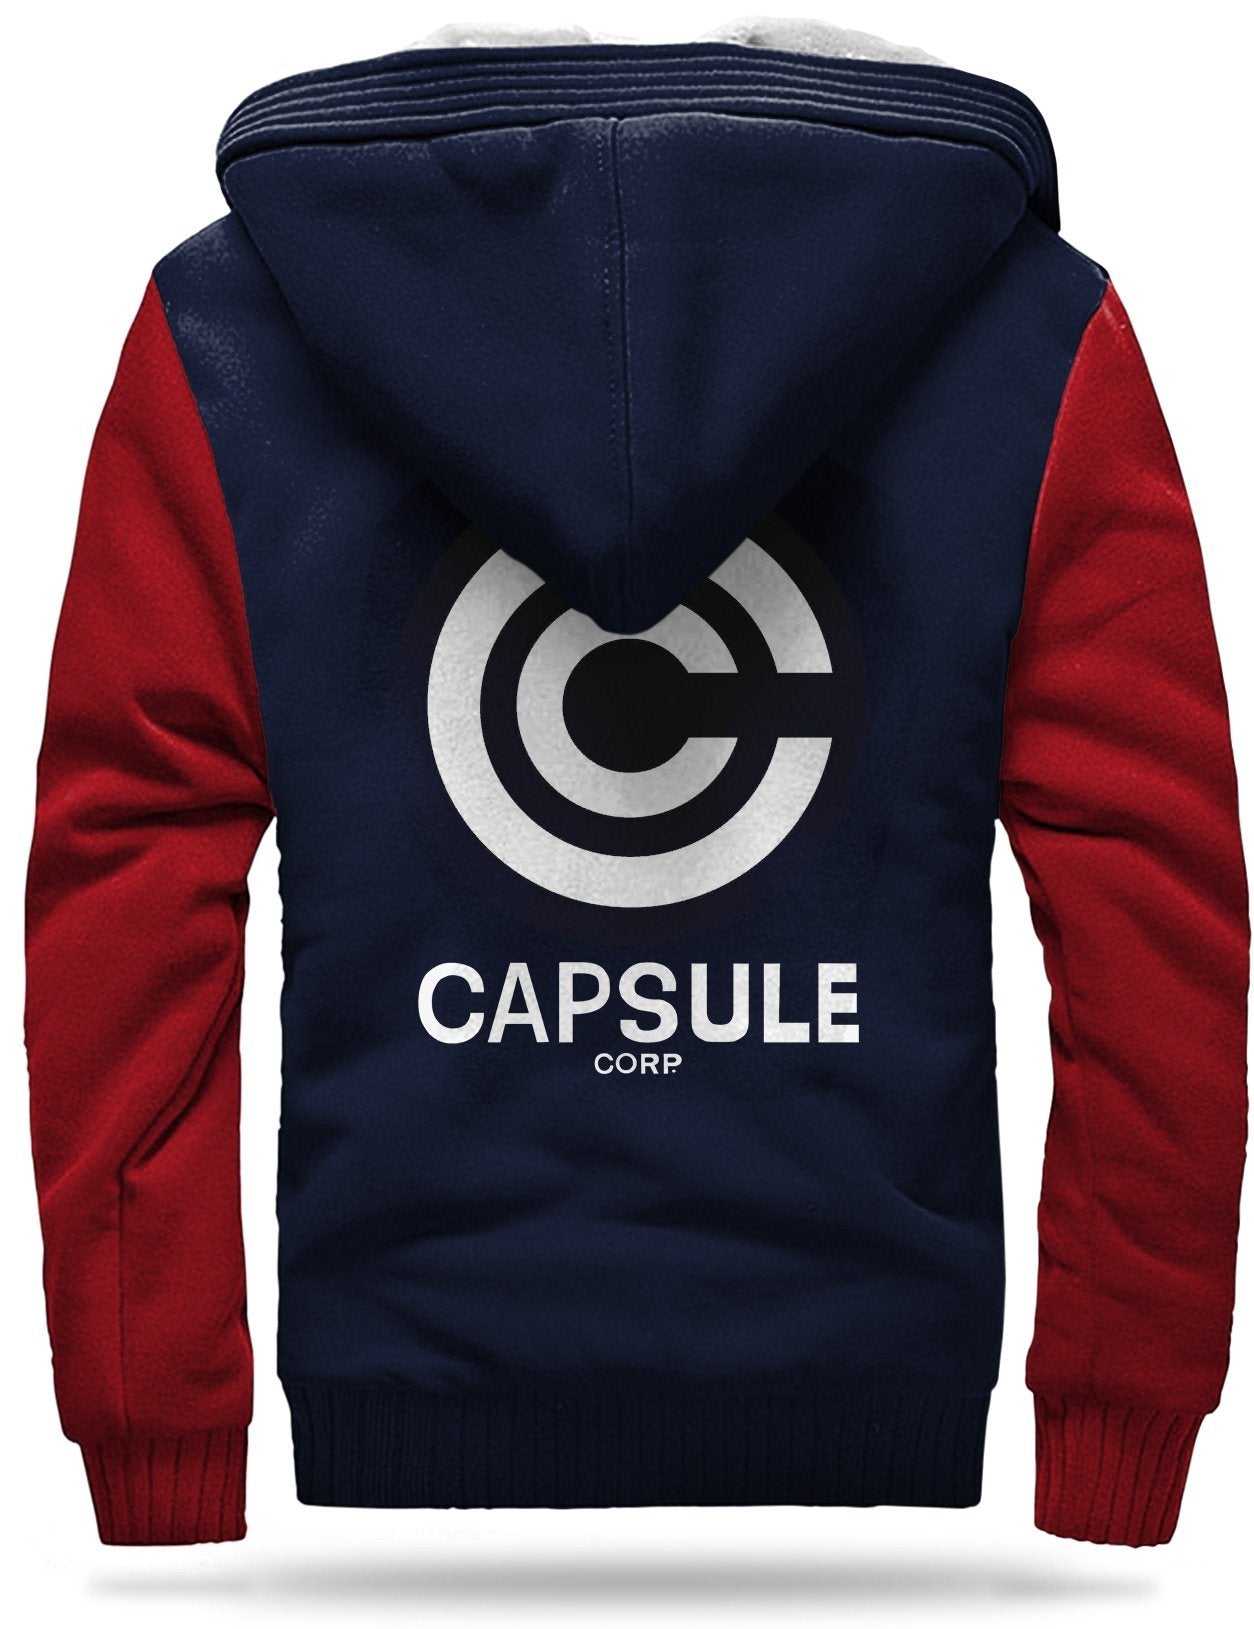 Vetement Capsule Corporation